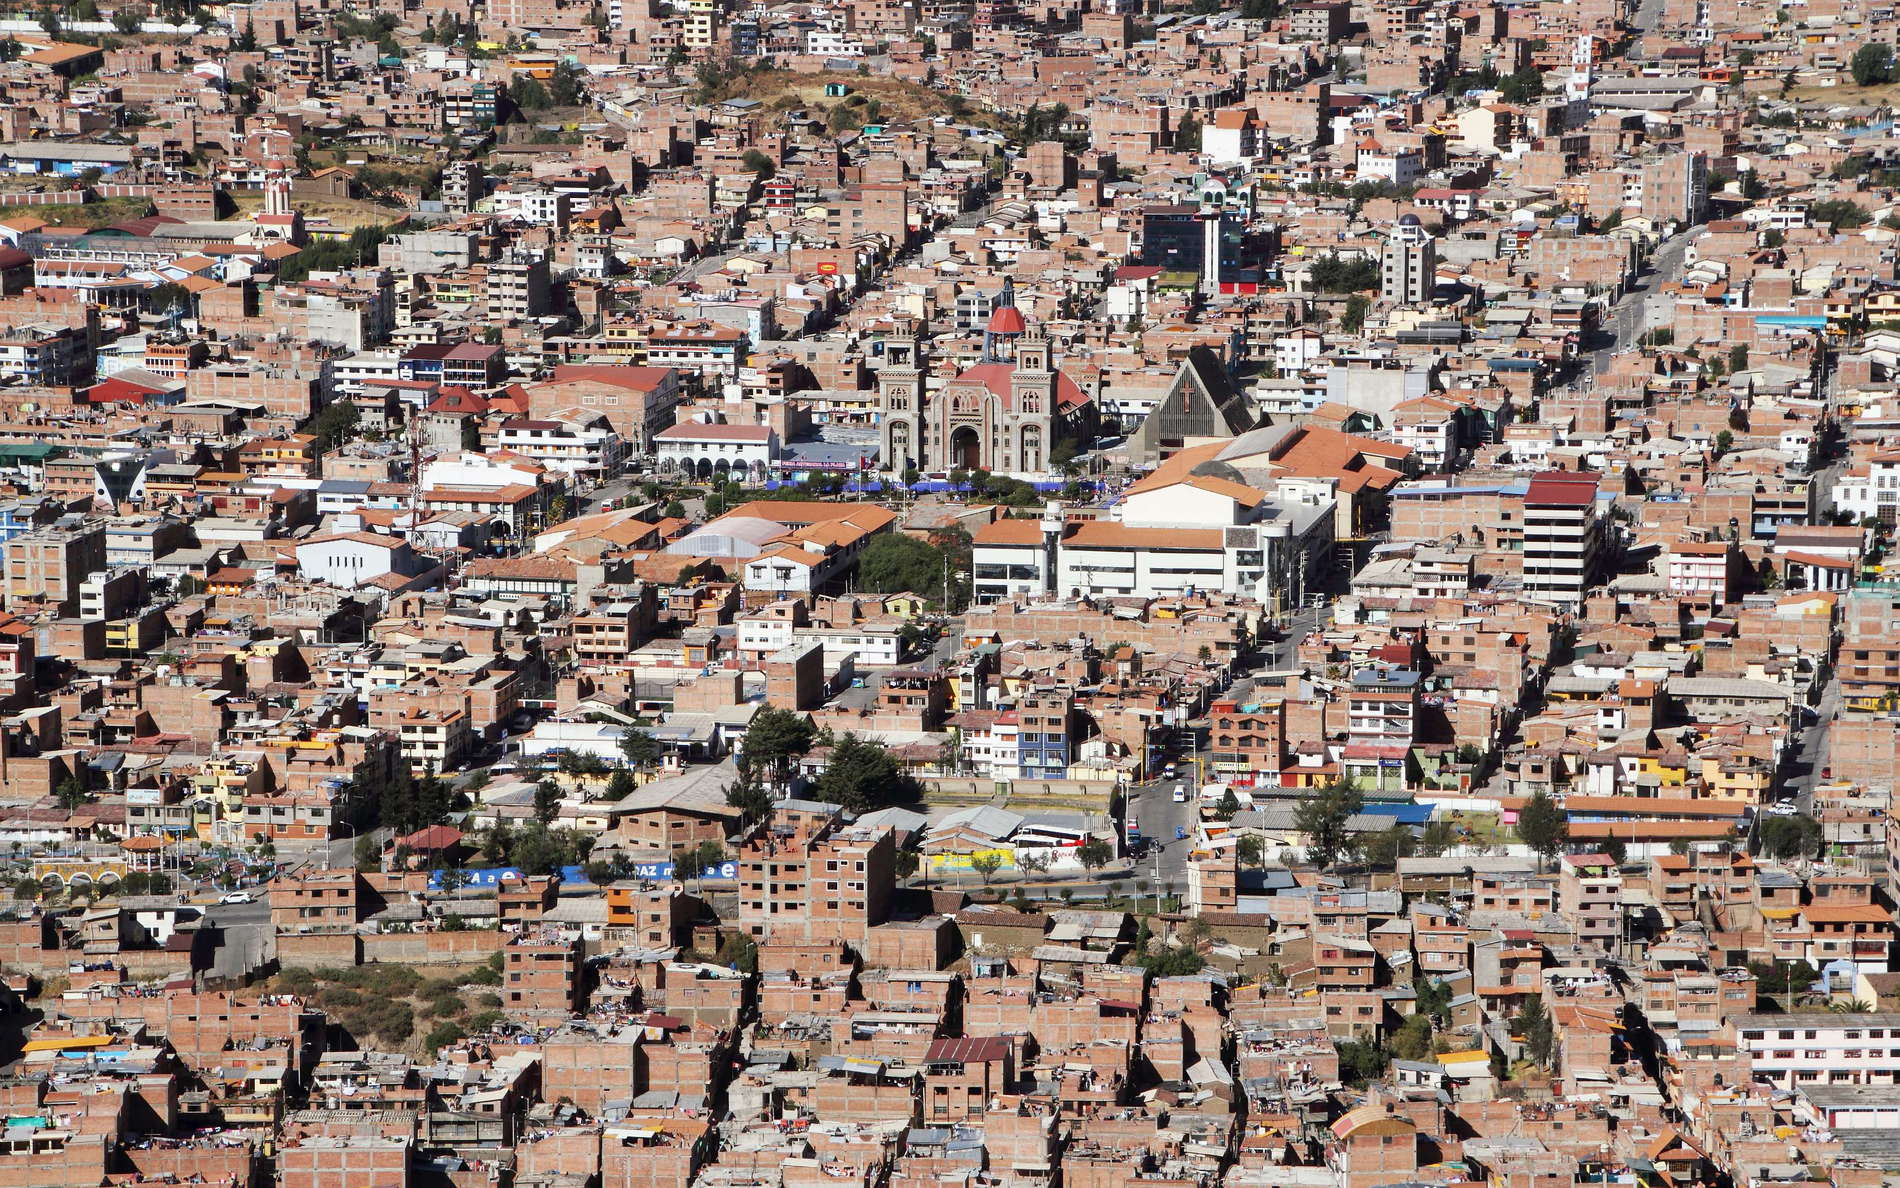 Huaraz | City centre